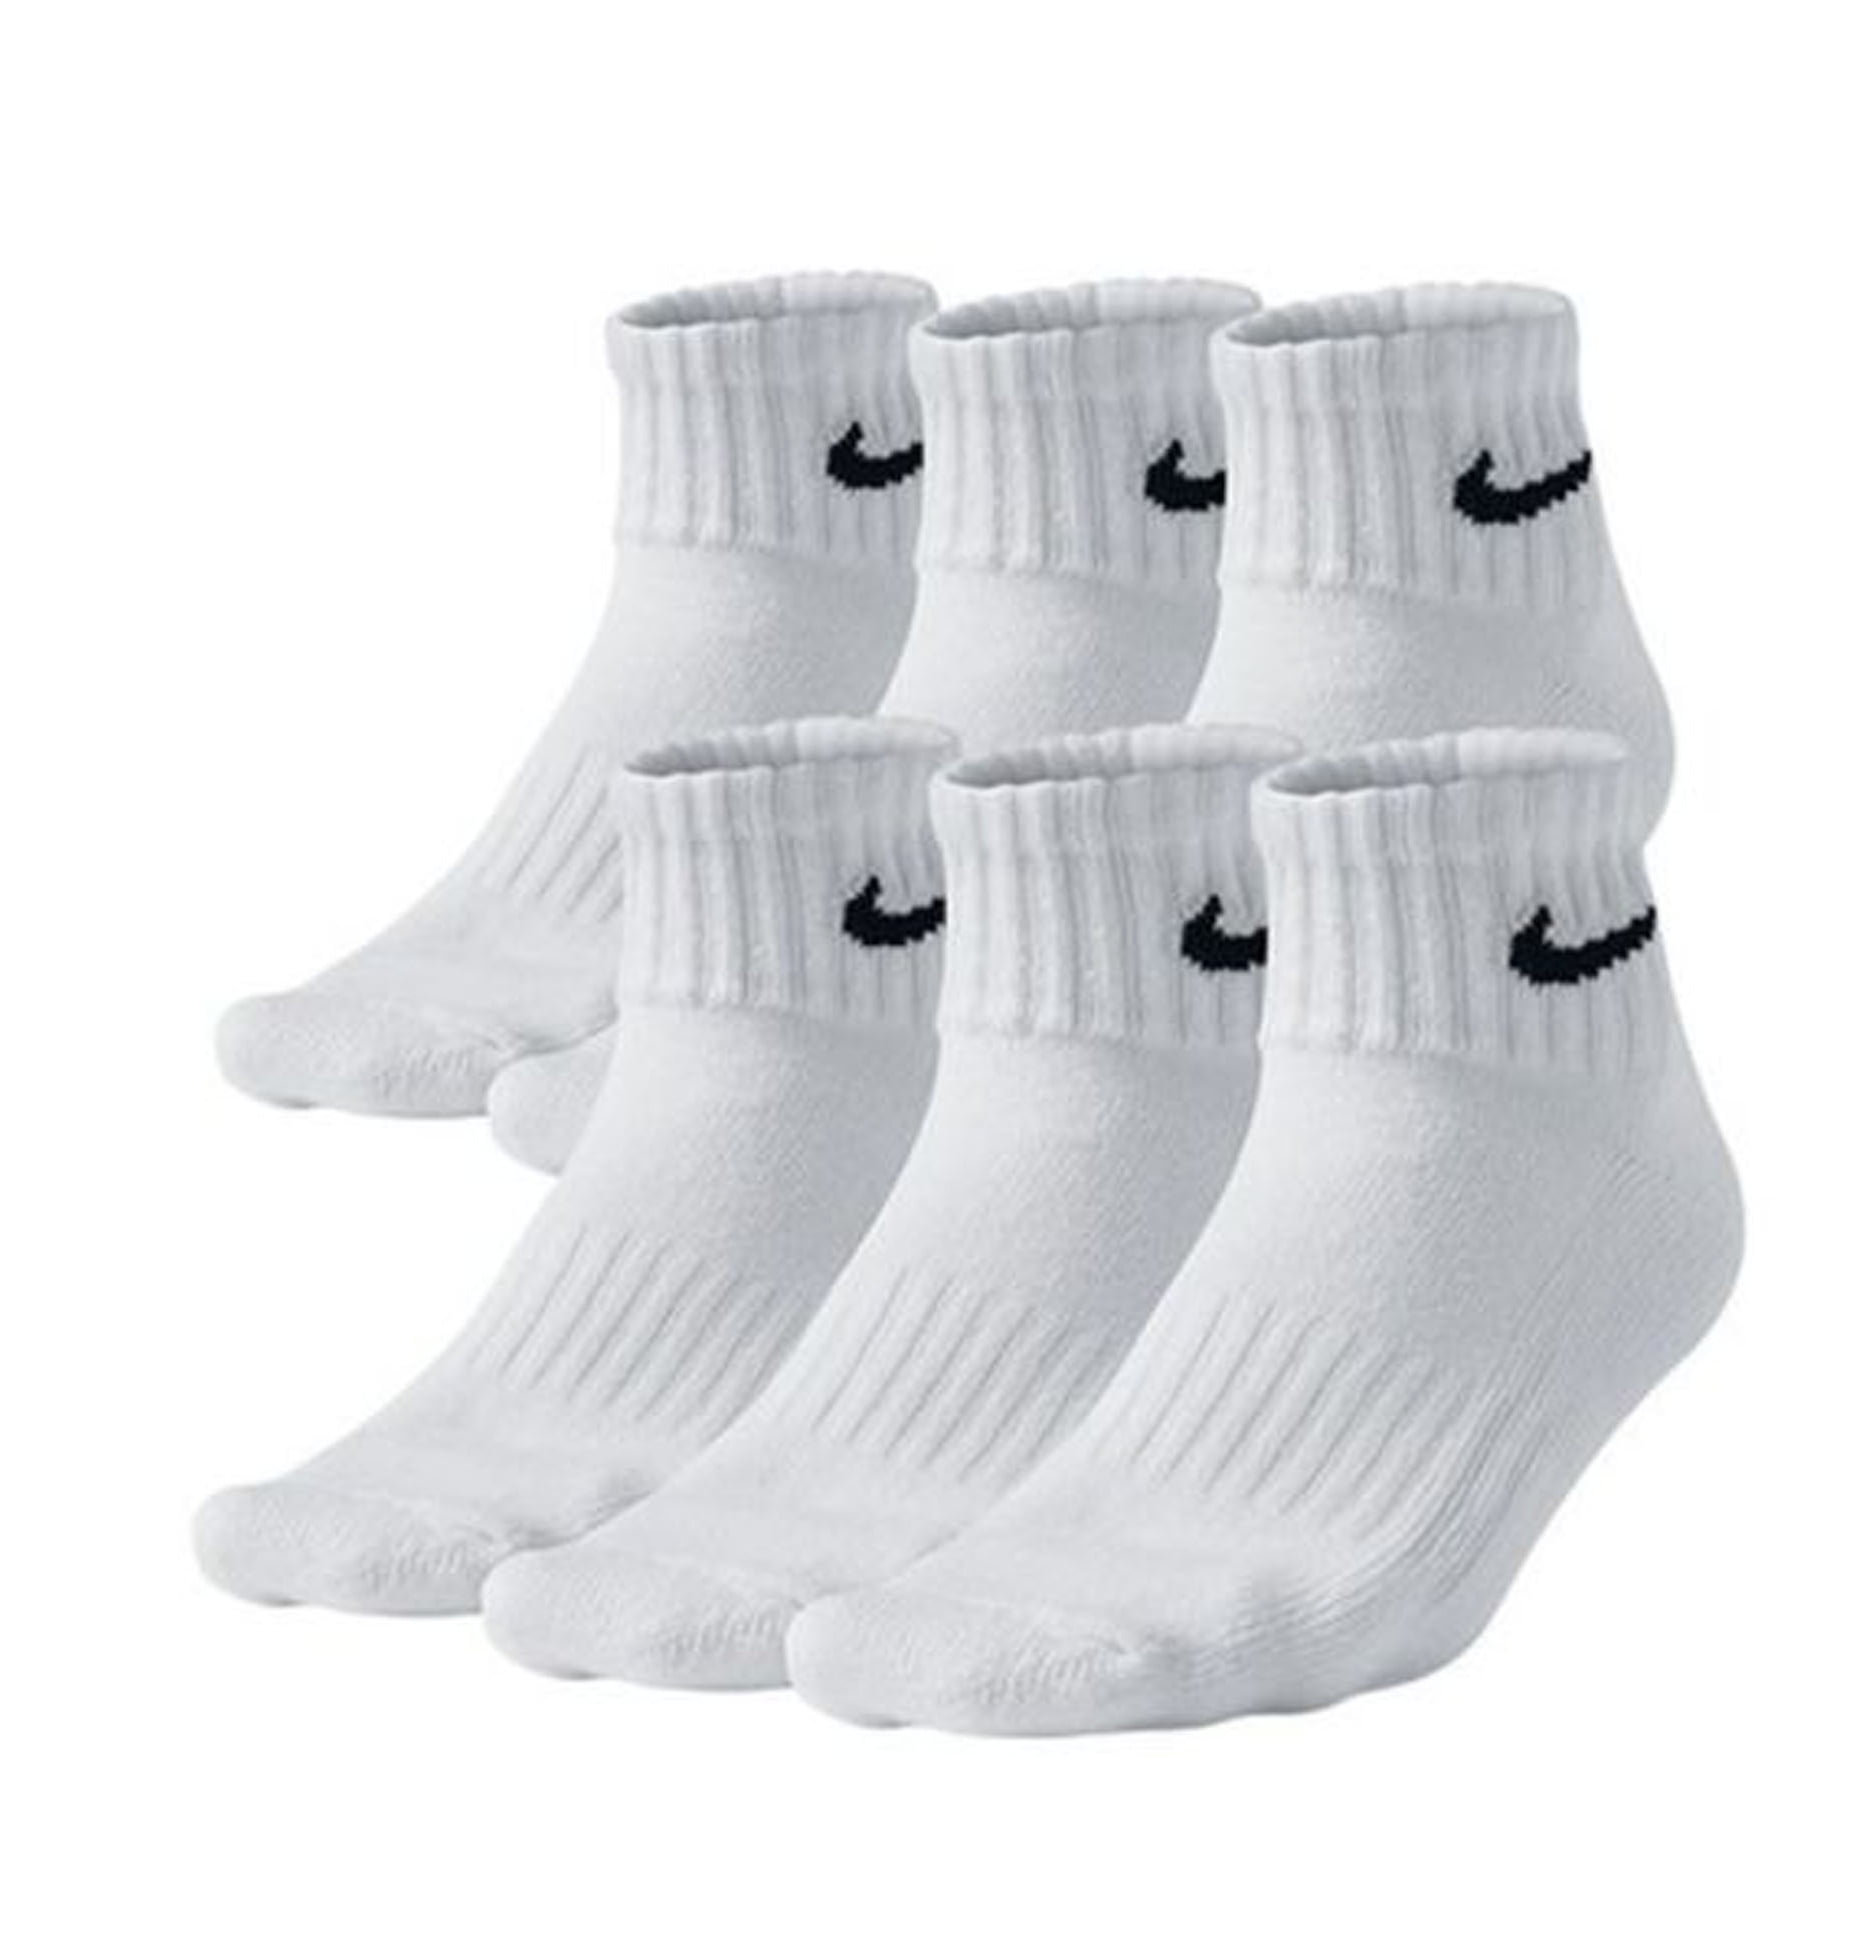 Nike Performance Cushioned Quarter White/Black Socks - 6 Pair Pack ...